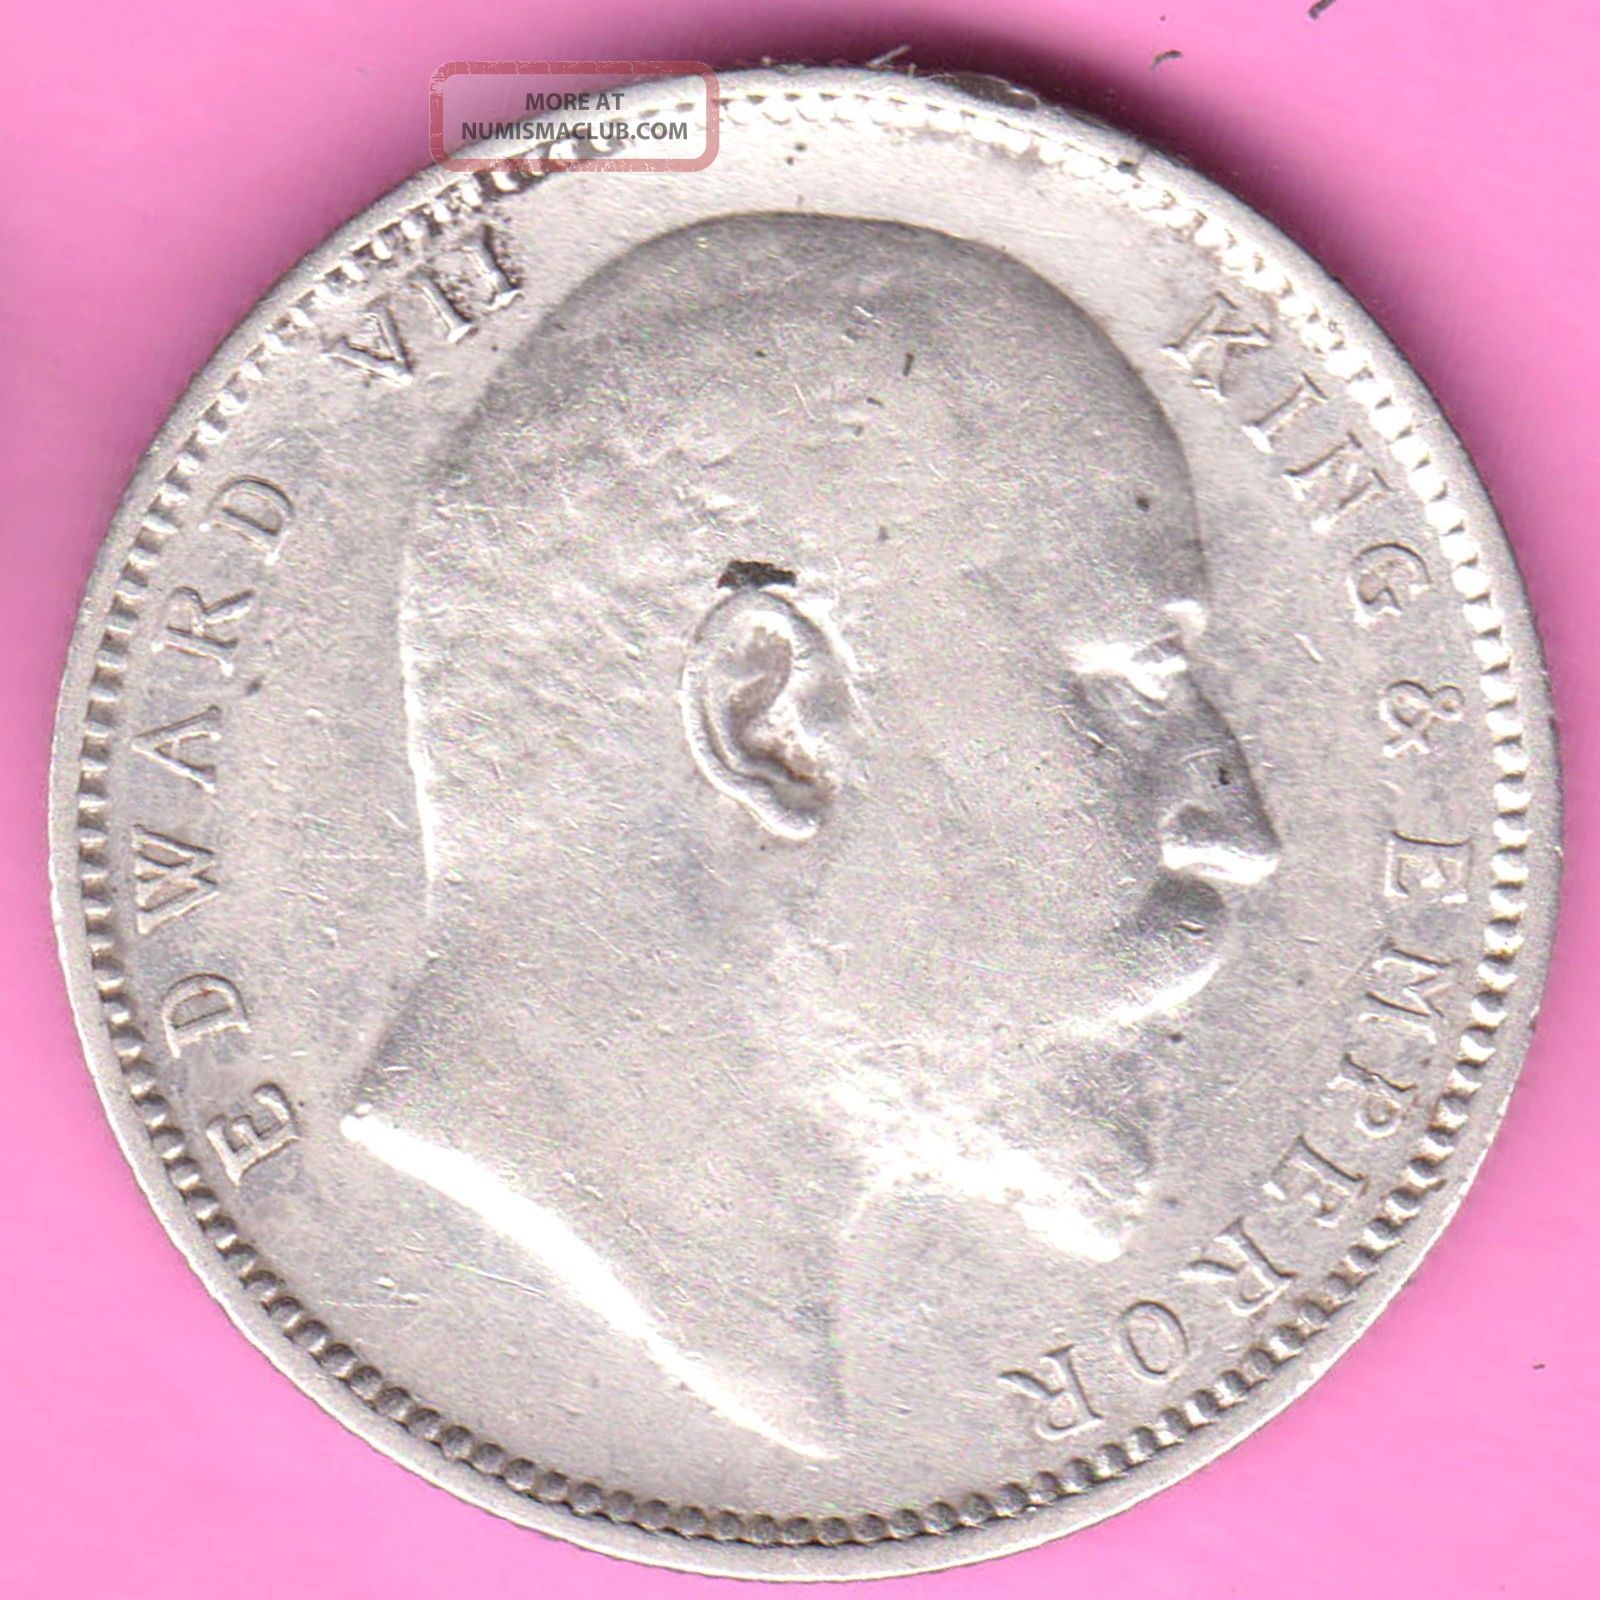 British India - 1904 - King Edward Vii - One Rupee - Rarest Silver Coin - 47 India photo